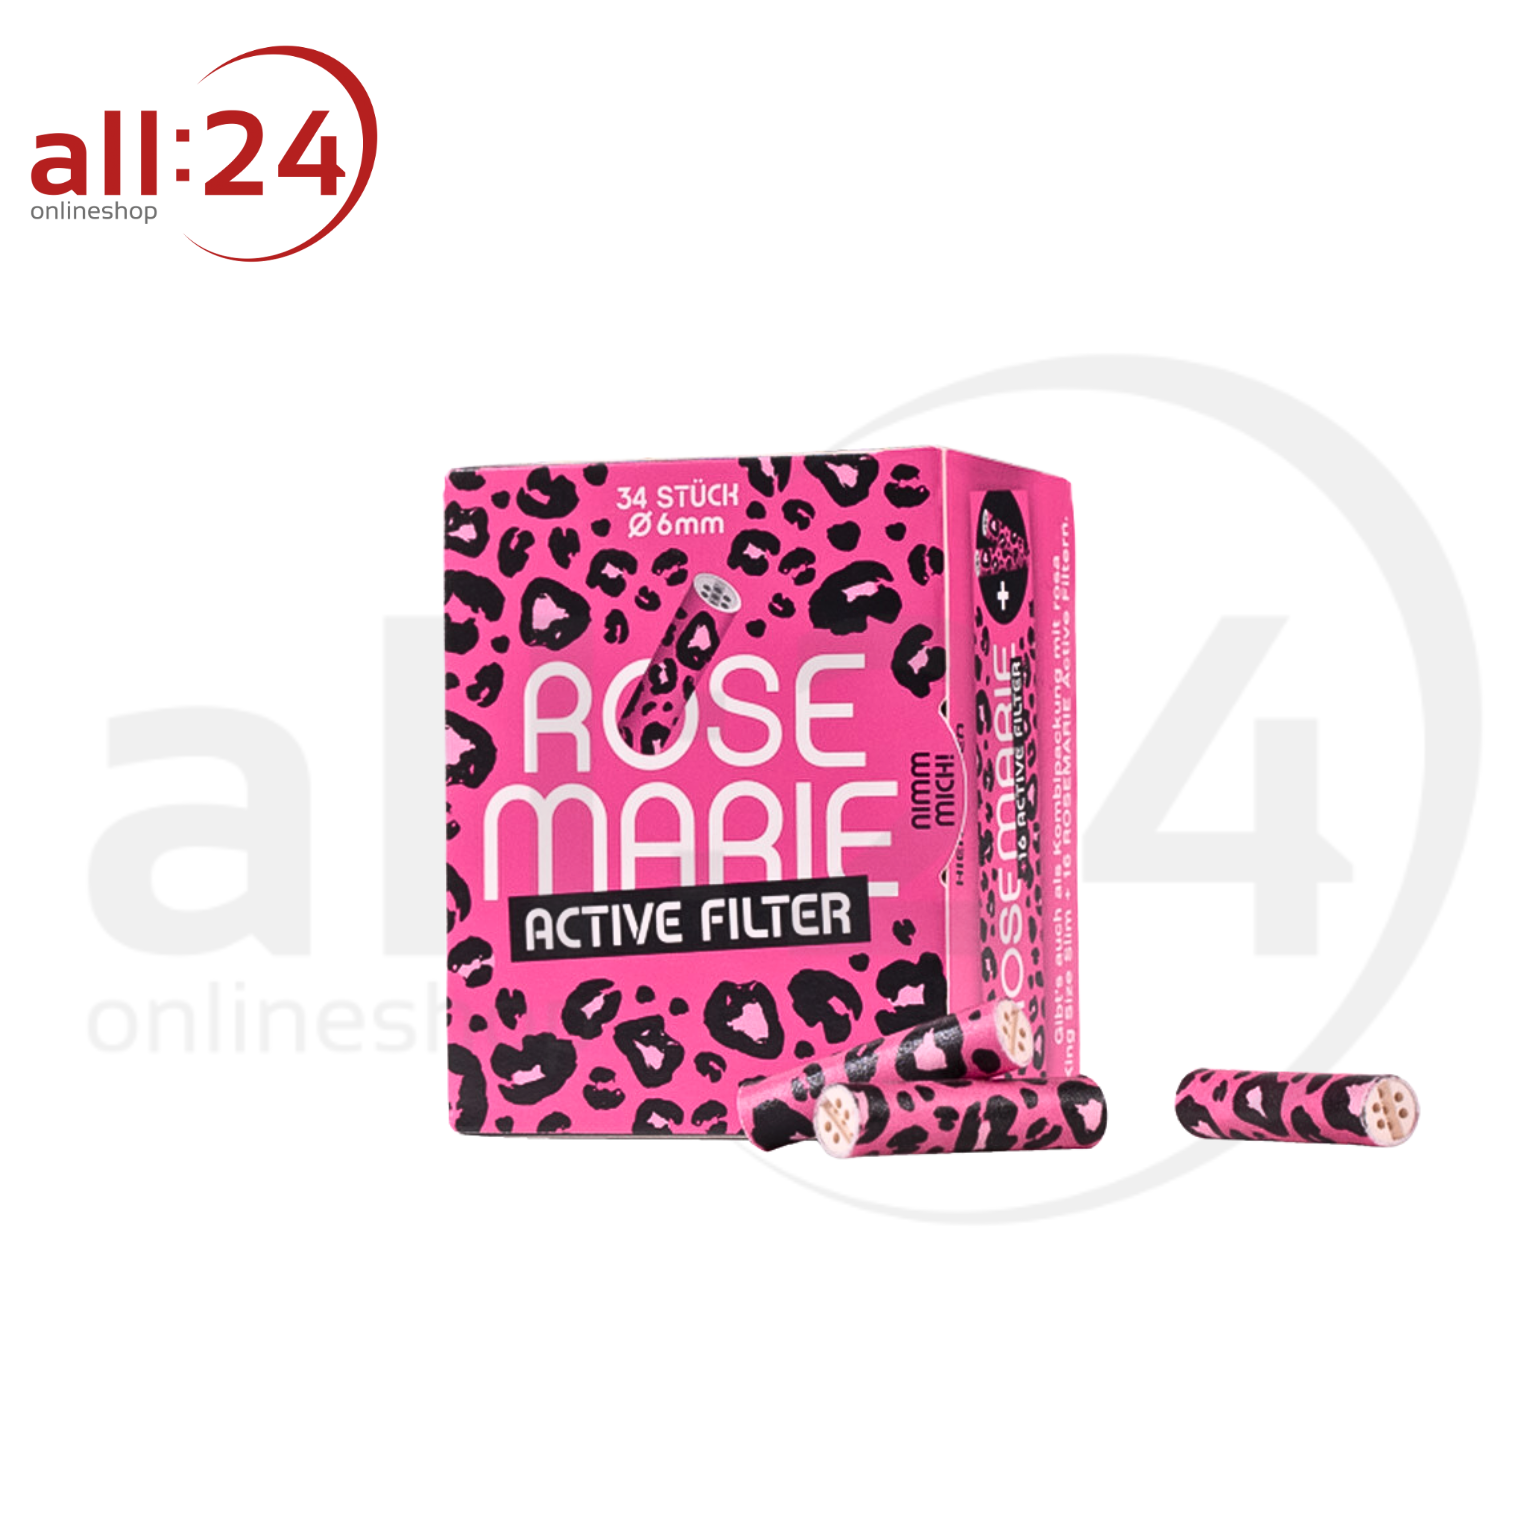 MARIE Rosemarie Active Filter 6mm - 10 Boxen à 34 Rosa-Leo Aktivkohlefilter 